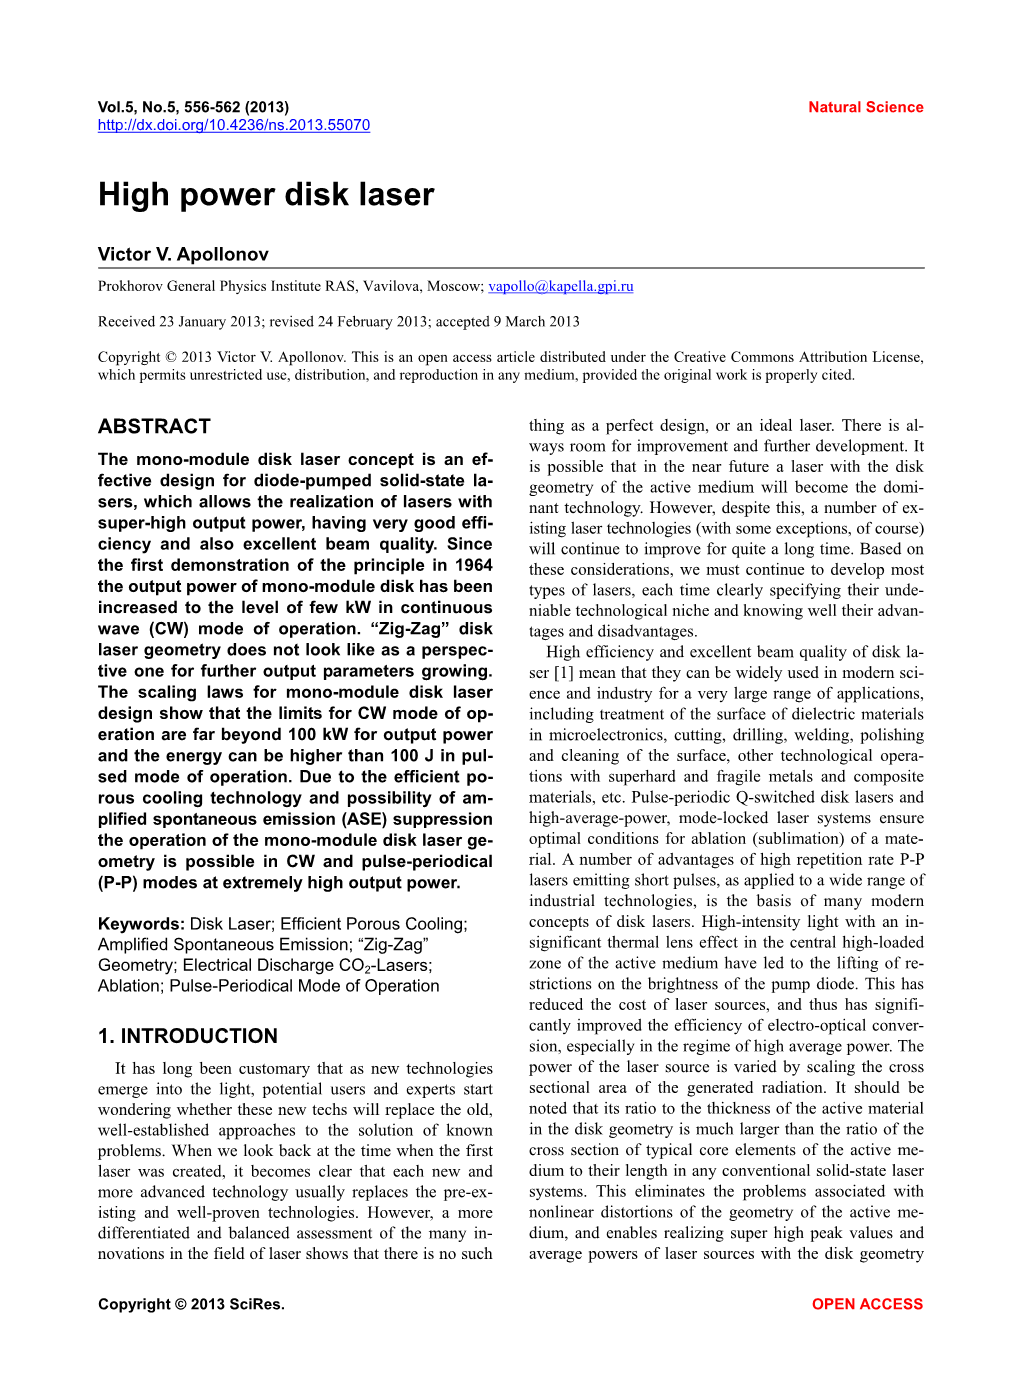 High Power Disk Laser